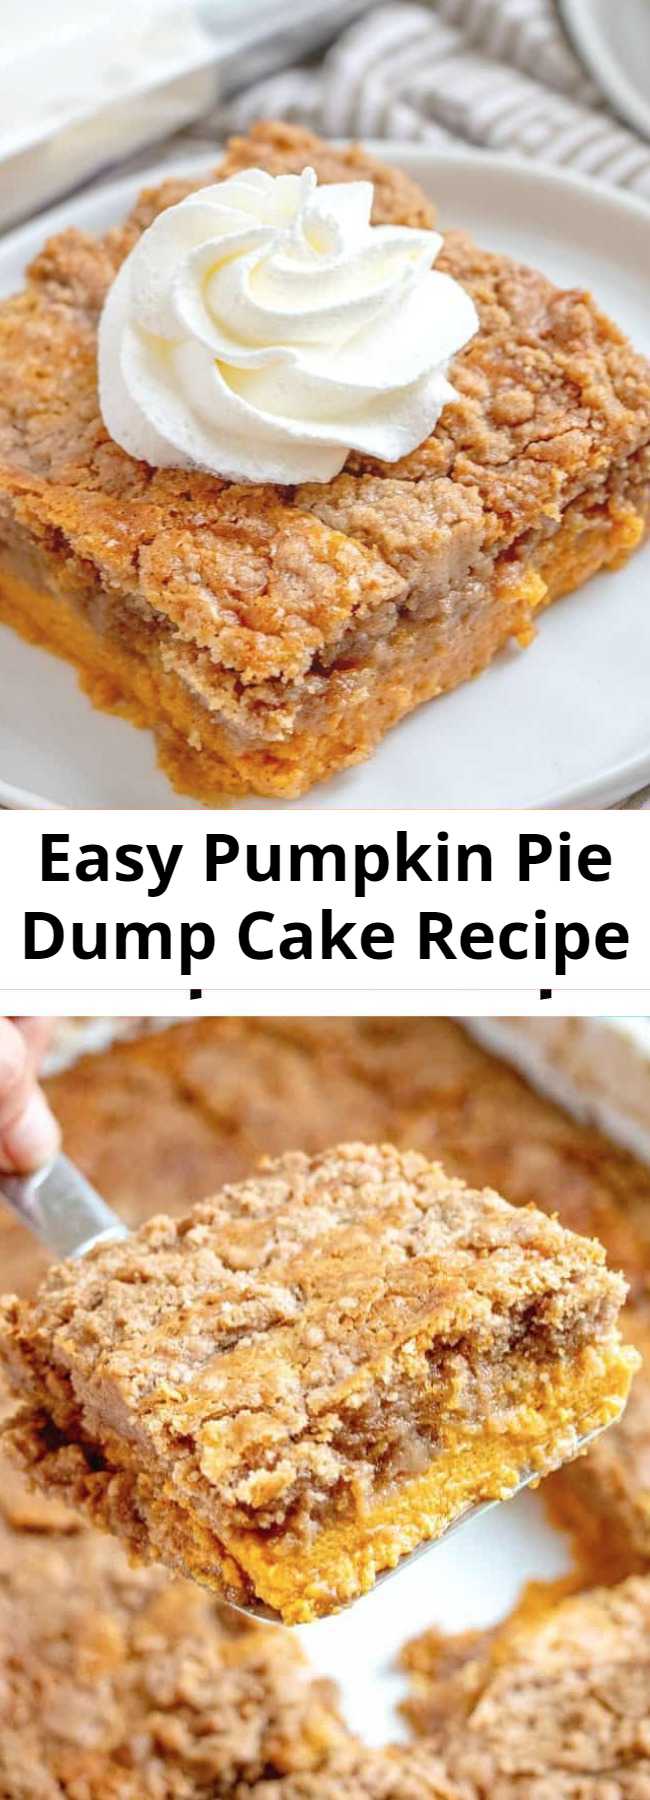 Easy Pumpkin Pie Dump Cake Recipe - Pumpkin Pie Dump Cake gets it’s name by dumping the ingredients into the baking dish. It is like a pumpkin pie and a spice cake all in one! #Pumpkin #Pie #DumpCake #Fall #Dessert